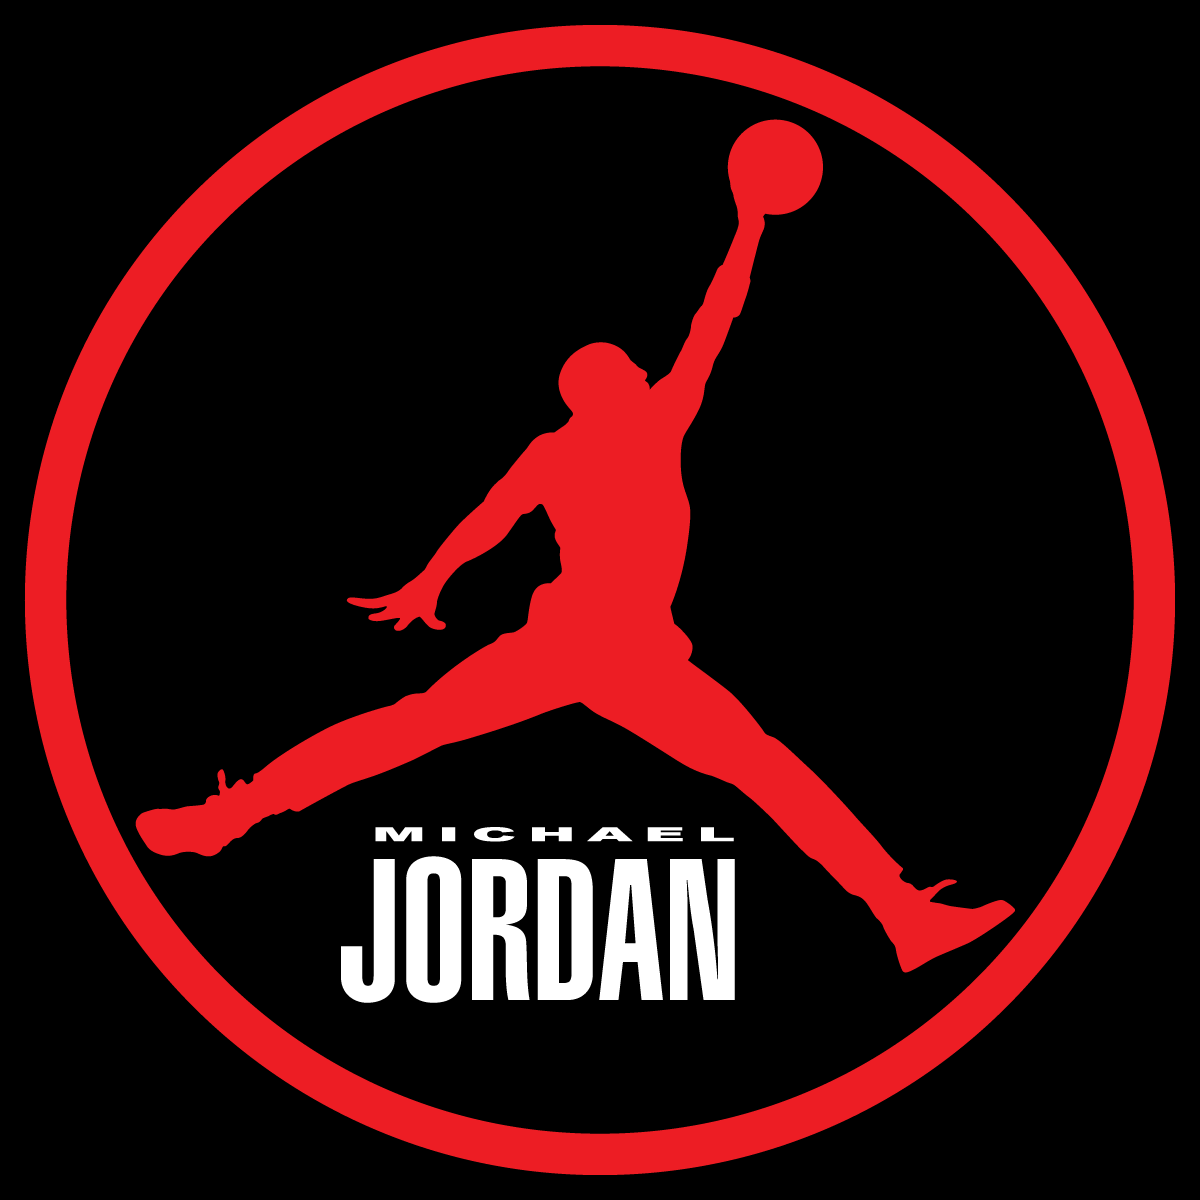 Download Air Jordan Logo Vector at Vectorified.com | Collection of ...